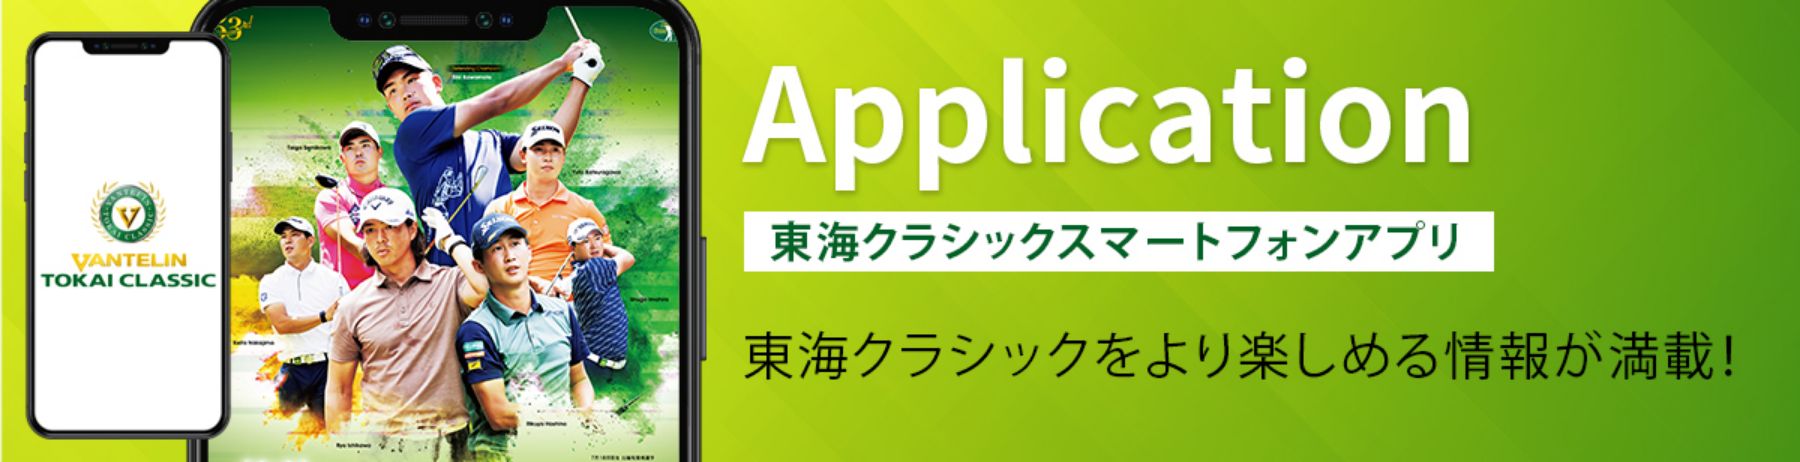  Application「東海クラシックスマートフォンアプリ」東海クラシックをより楽しめる情報が満載!